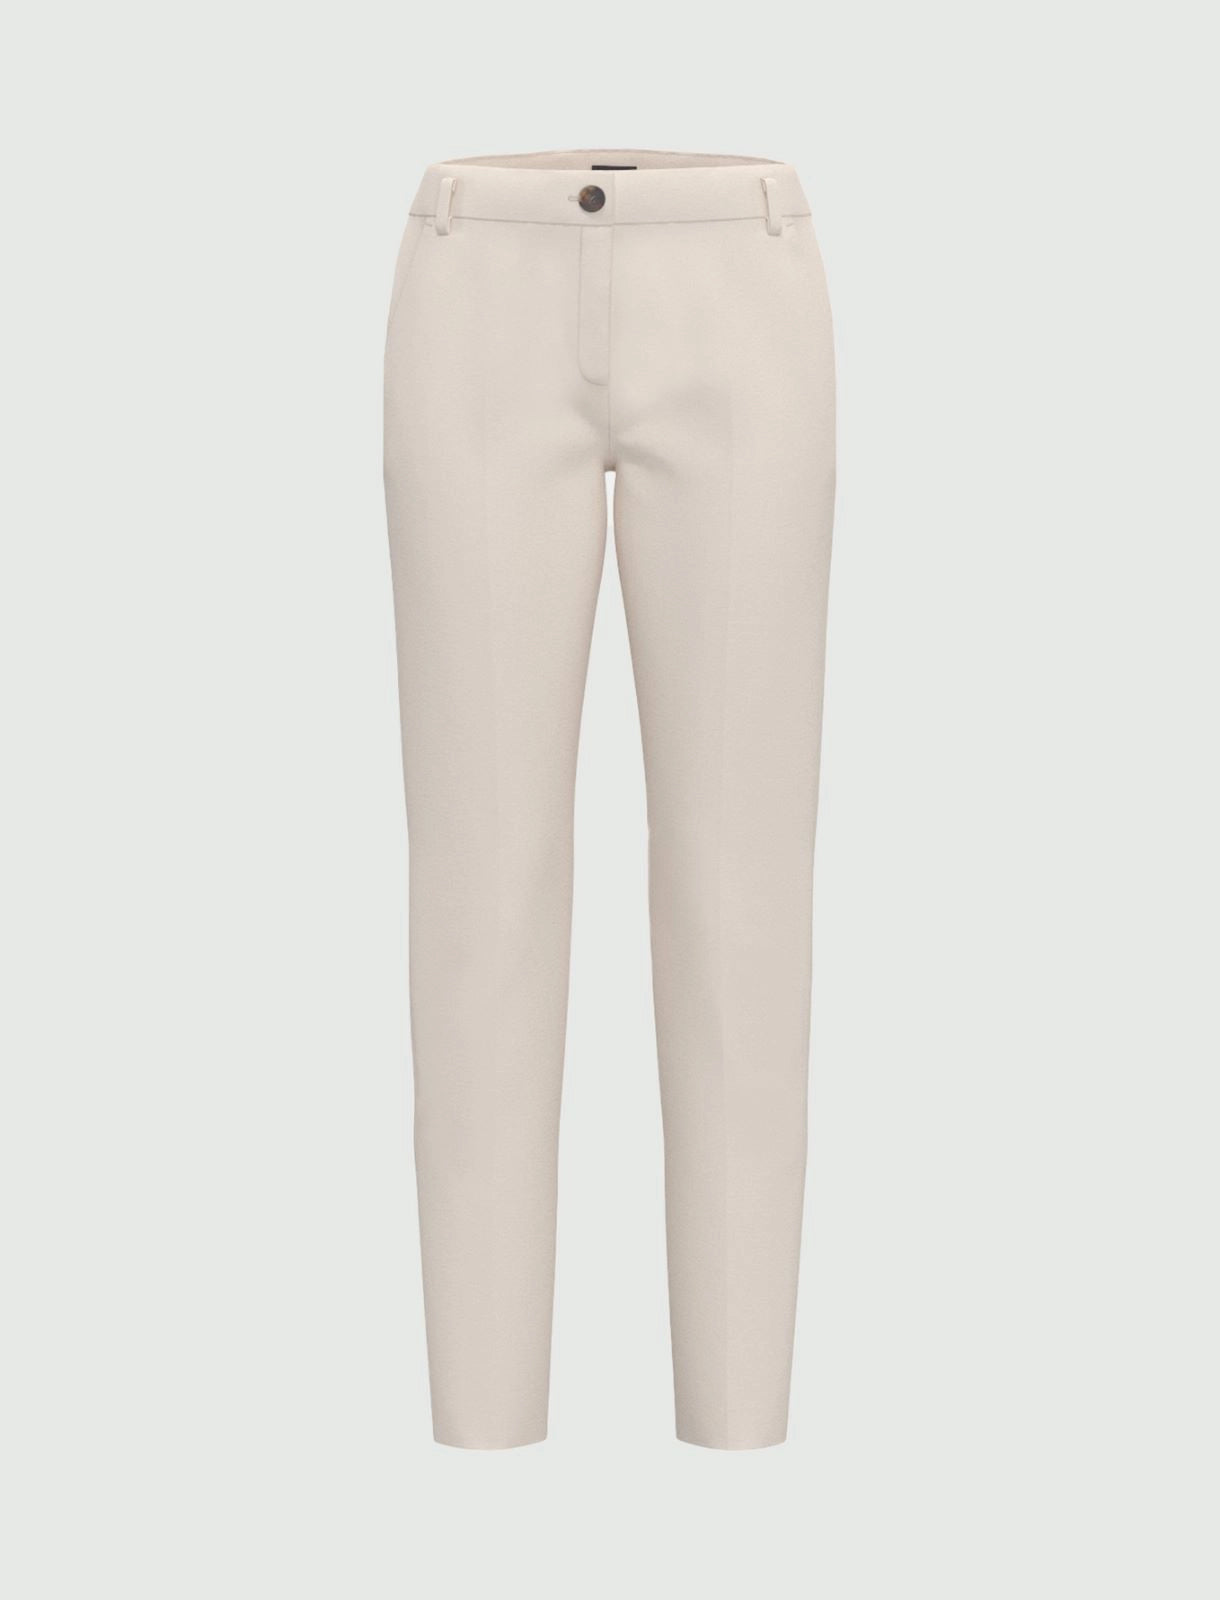 Emme Marella pantalone panna - Premium PANTALONE STRETTO from EMME MARELLA - Just €79.90! Shop now at Amaltea